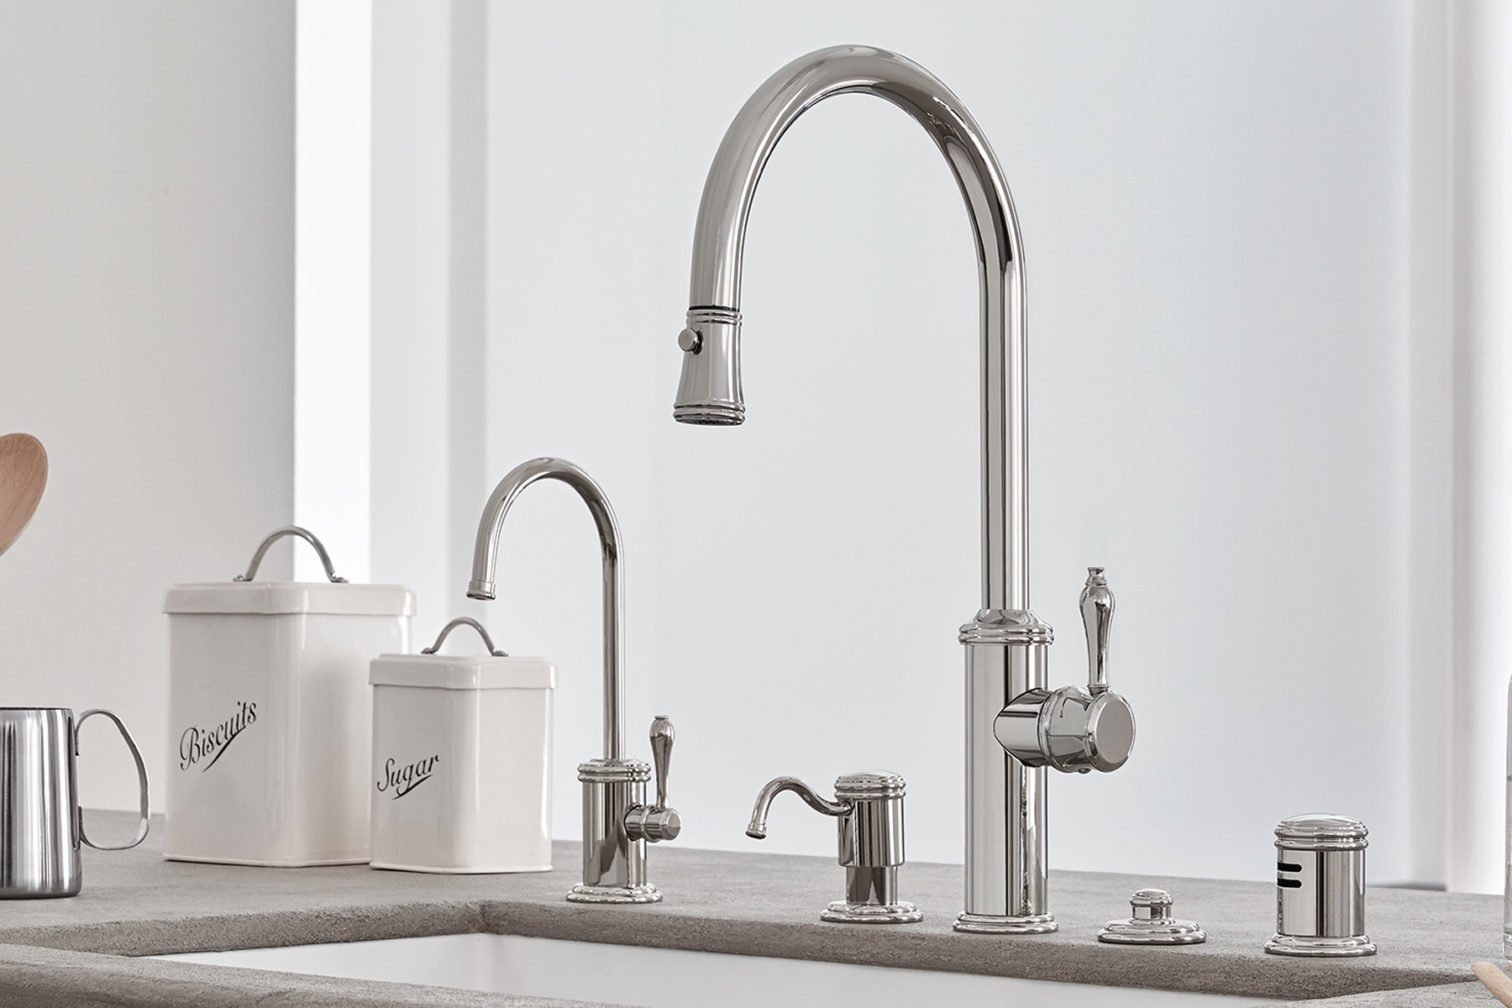 California Faucets Presents New Davoli Series California Faucets